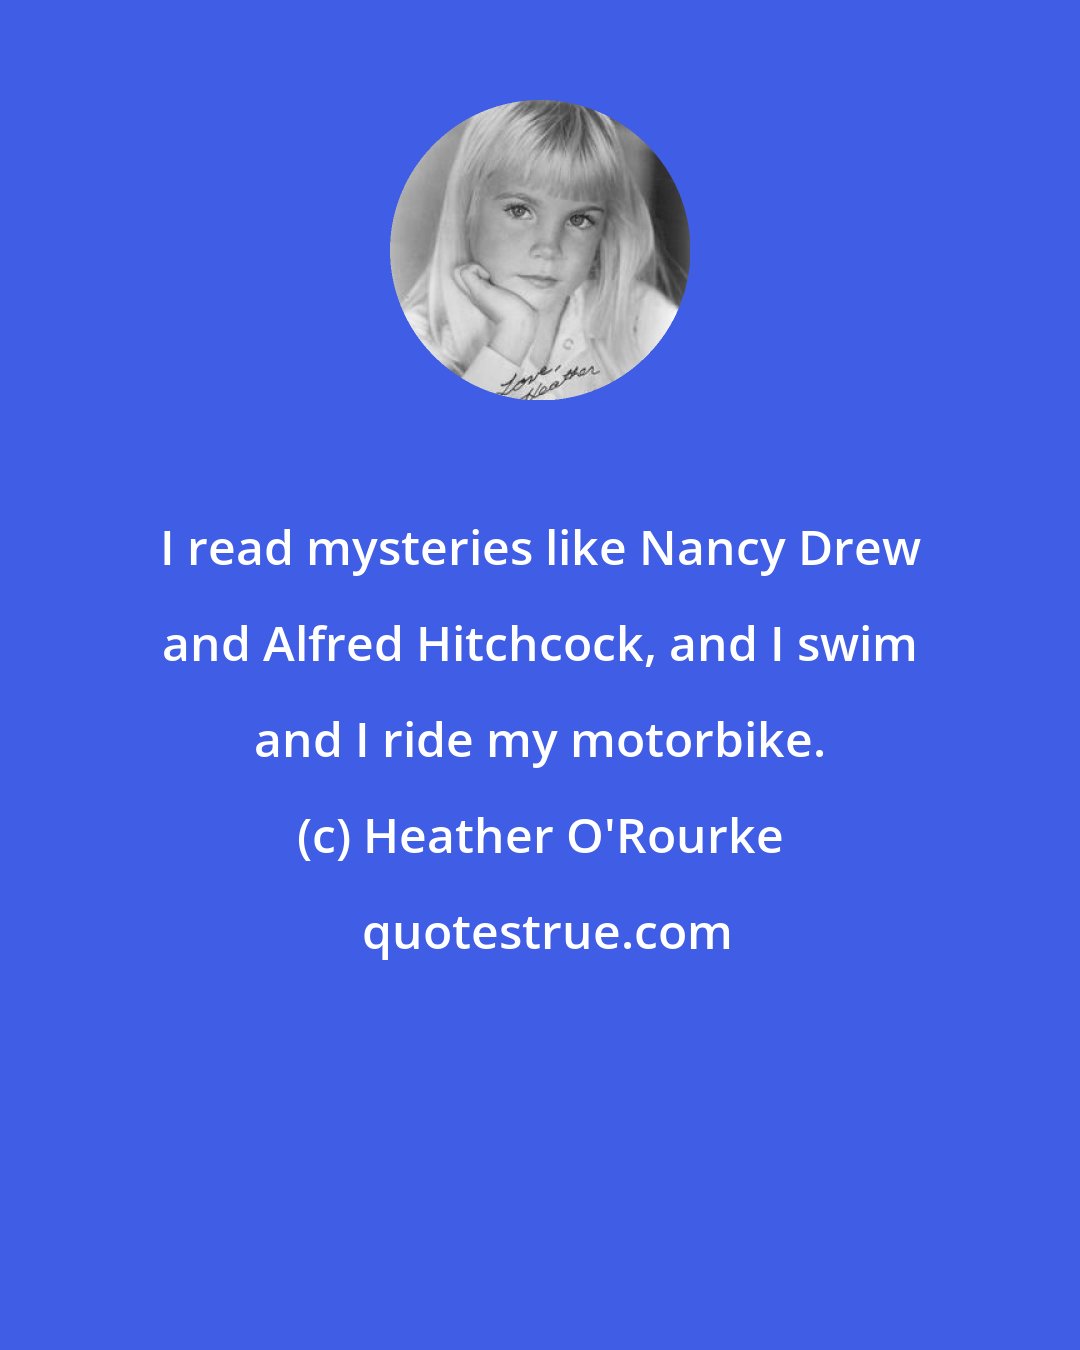 Heather O'Rourke: I read mysteries like Nancy Drew and Alfred Hitchcock, and I swim and I ride my motorbike.